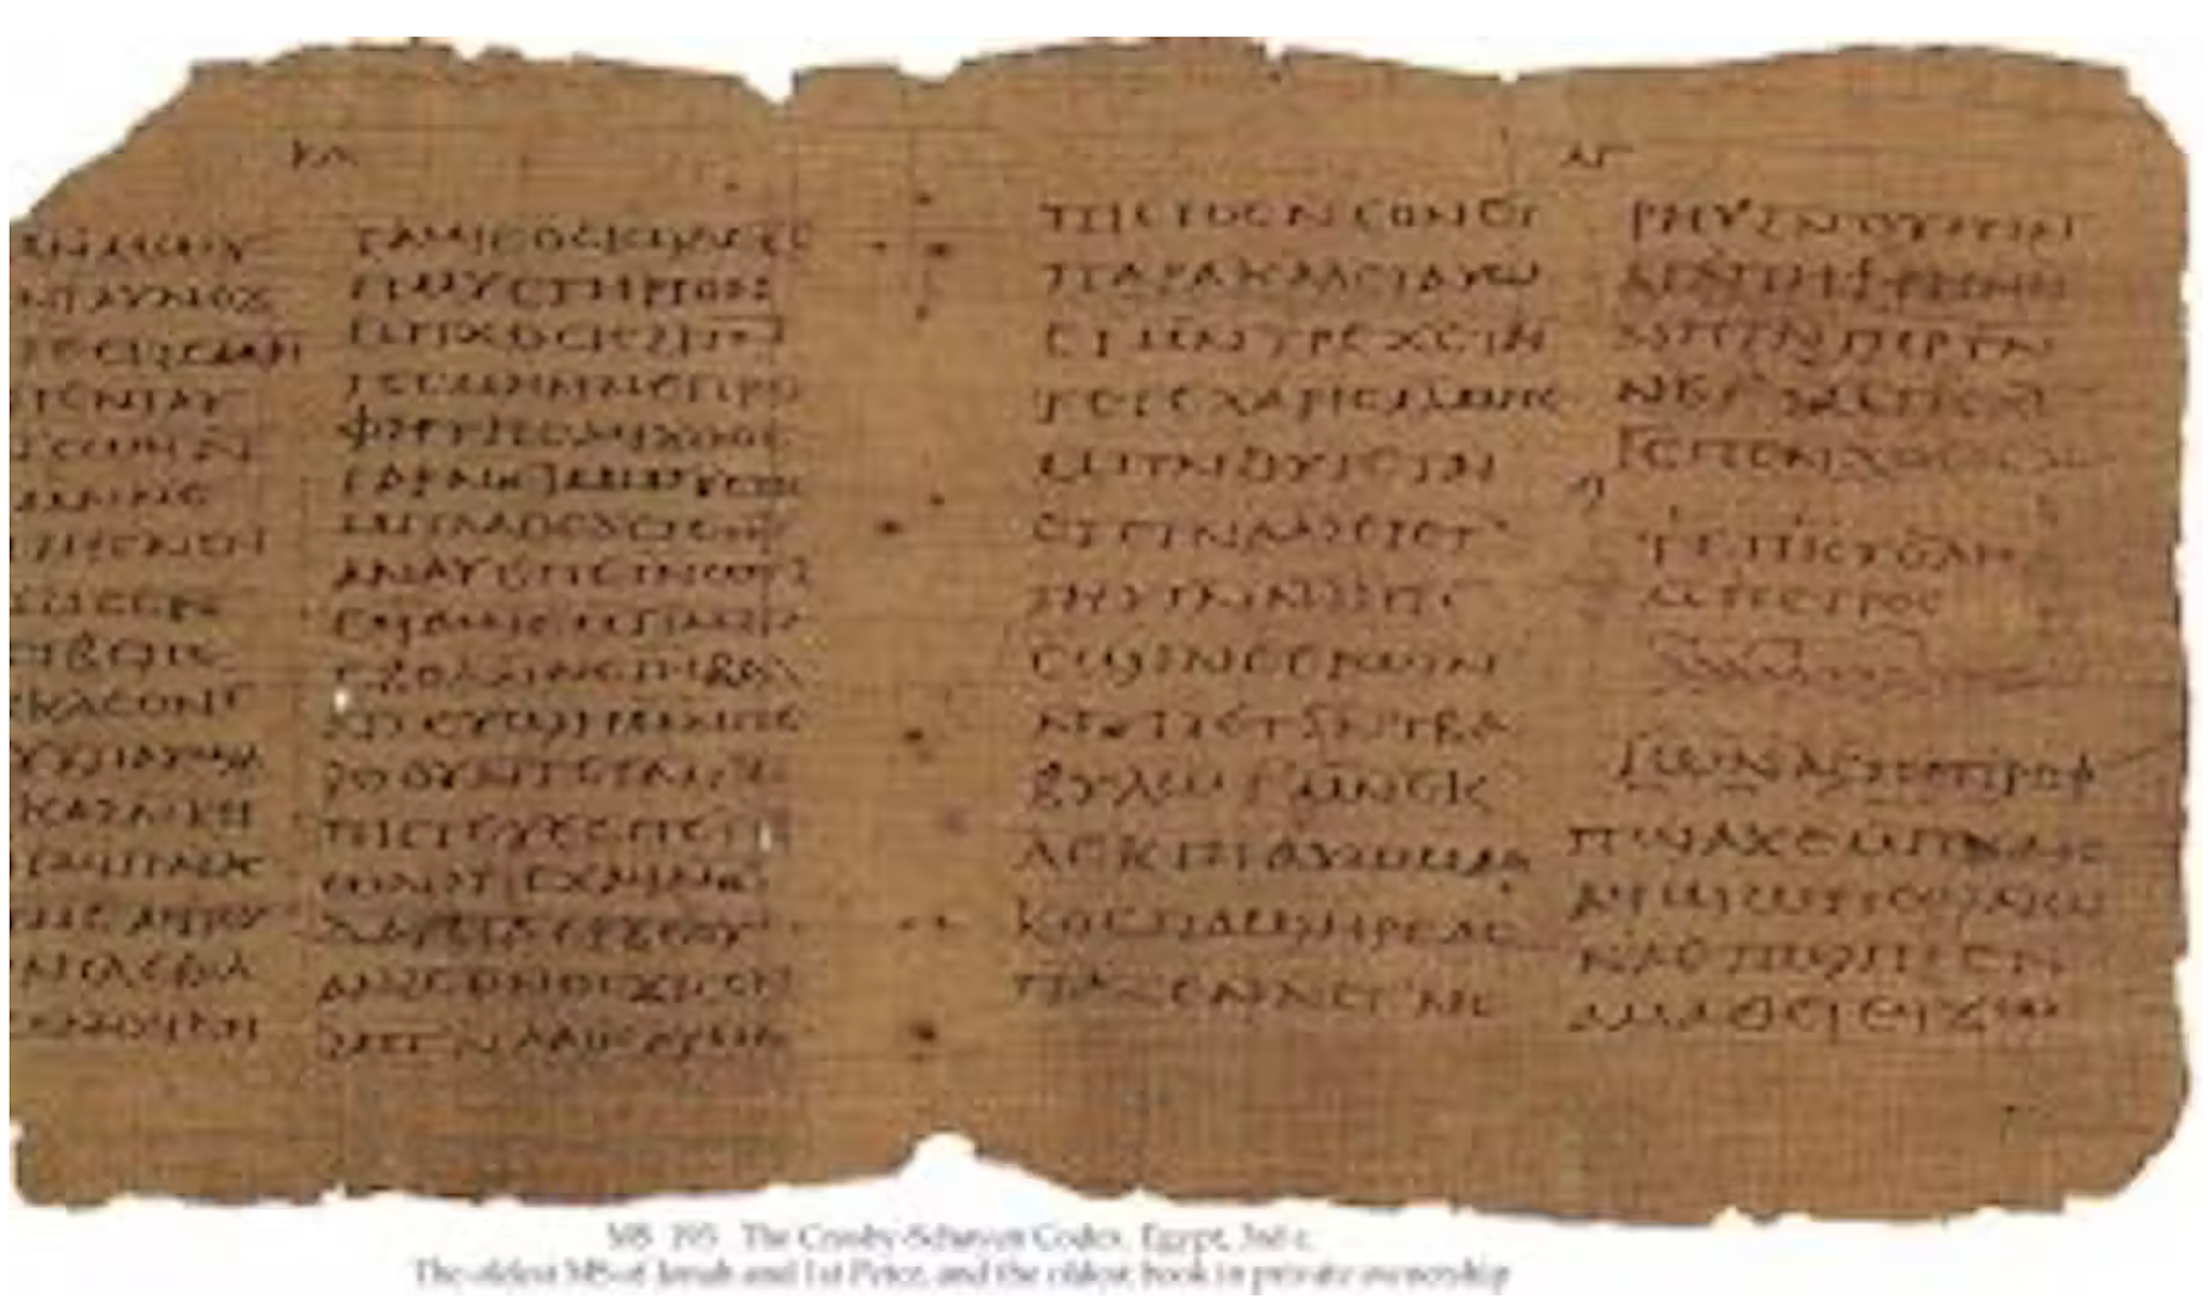  The Crosby-Schøyen Codex, written in Coptic, on papyrus. The Schøyen Collection 